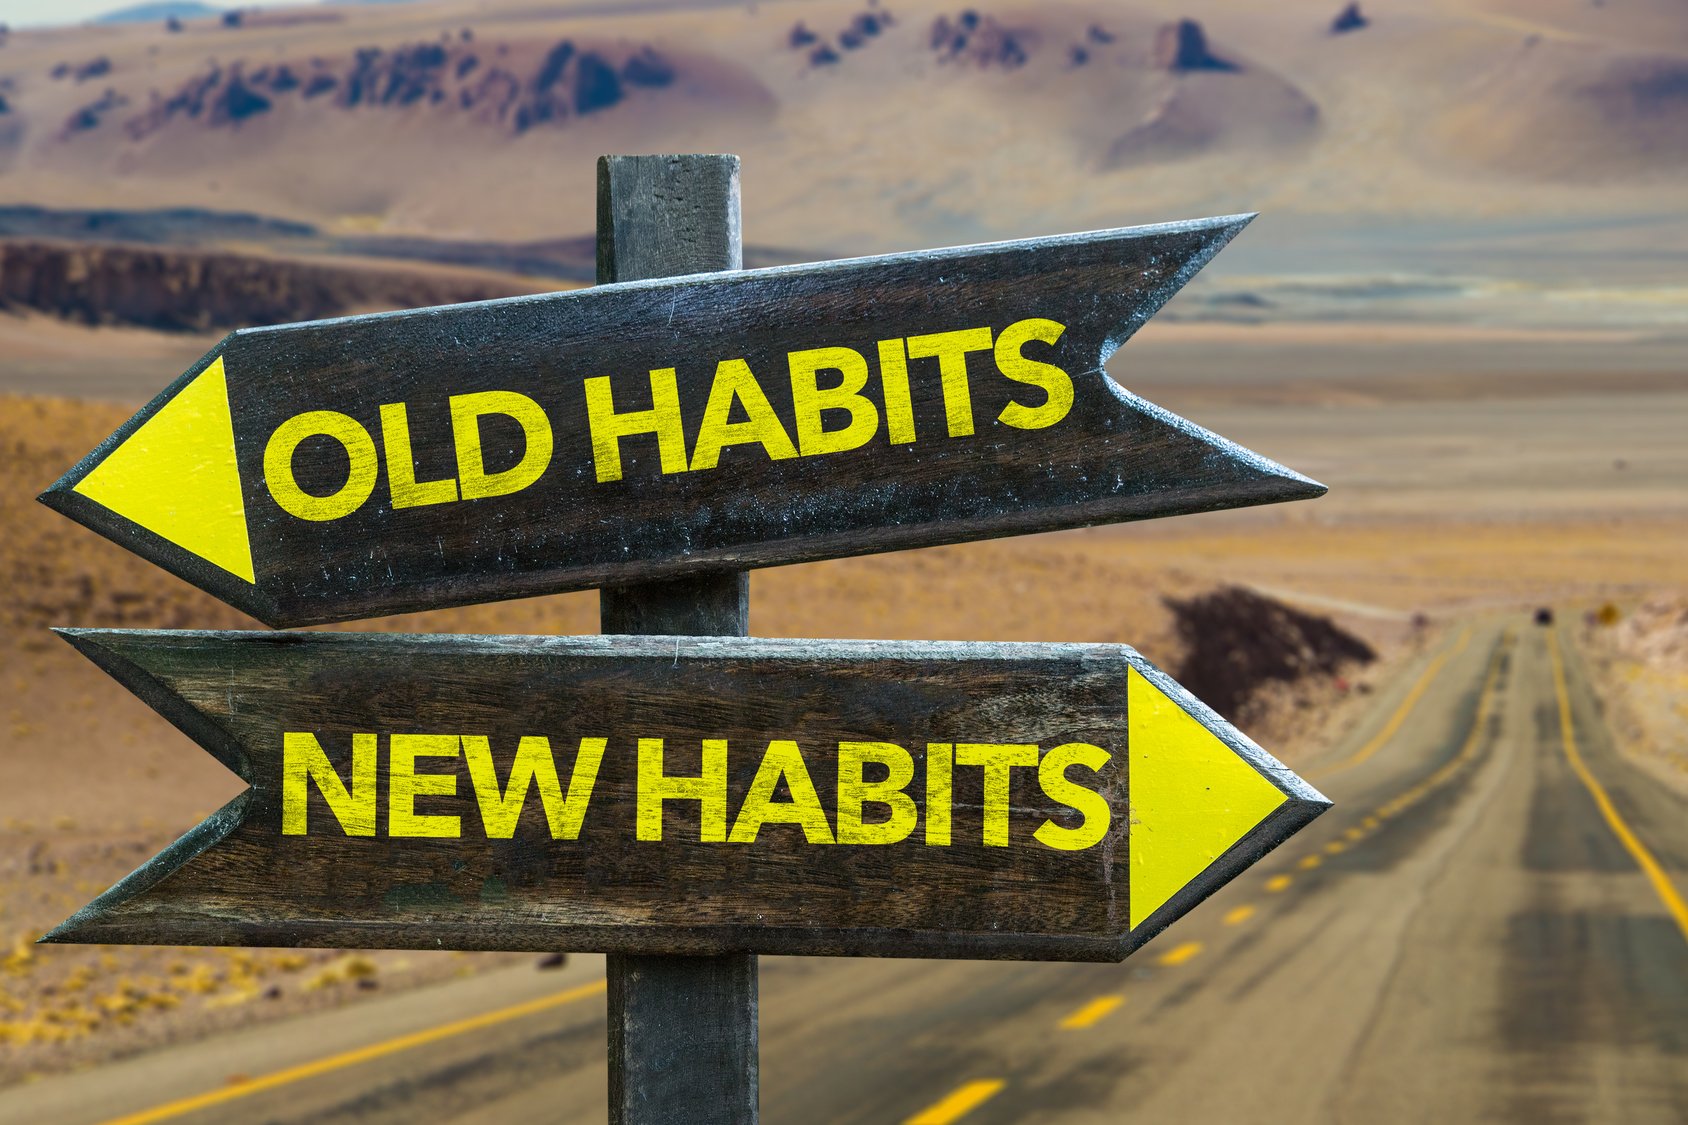 How to Change Habits in Hindi, How to Change Bad Habits, How to Change Your Habits, How to Change Habits of Thinking, How to Change Our Habits, How to Change My Habits